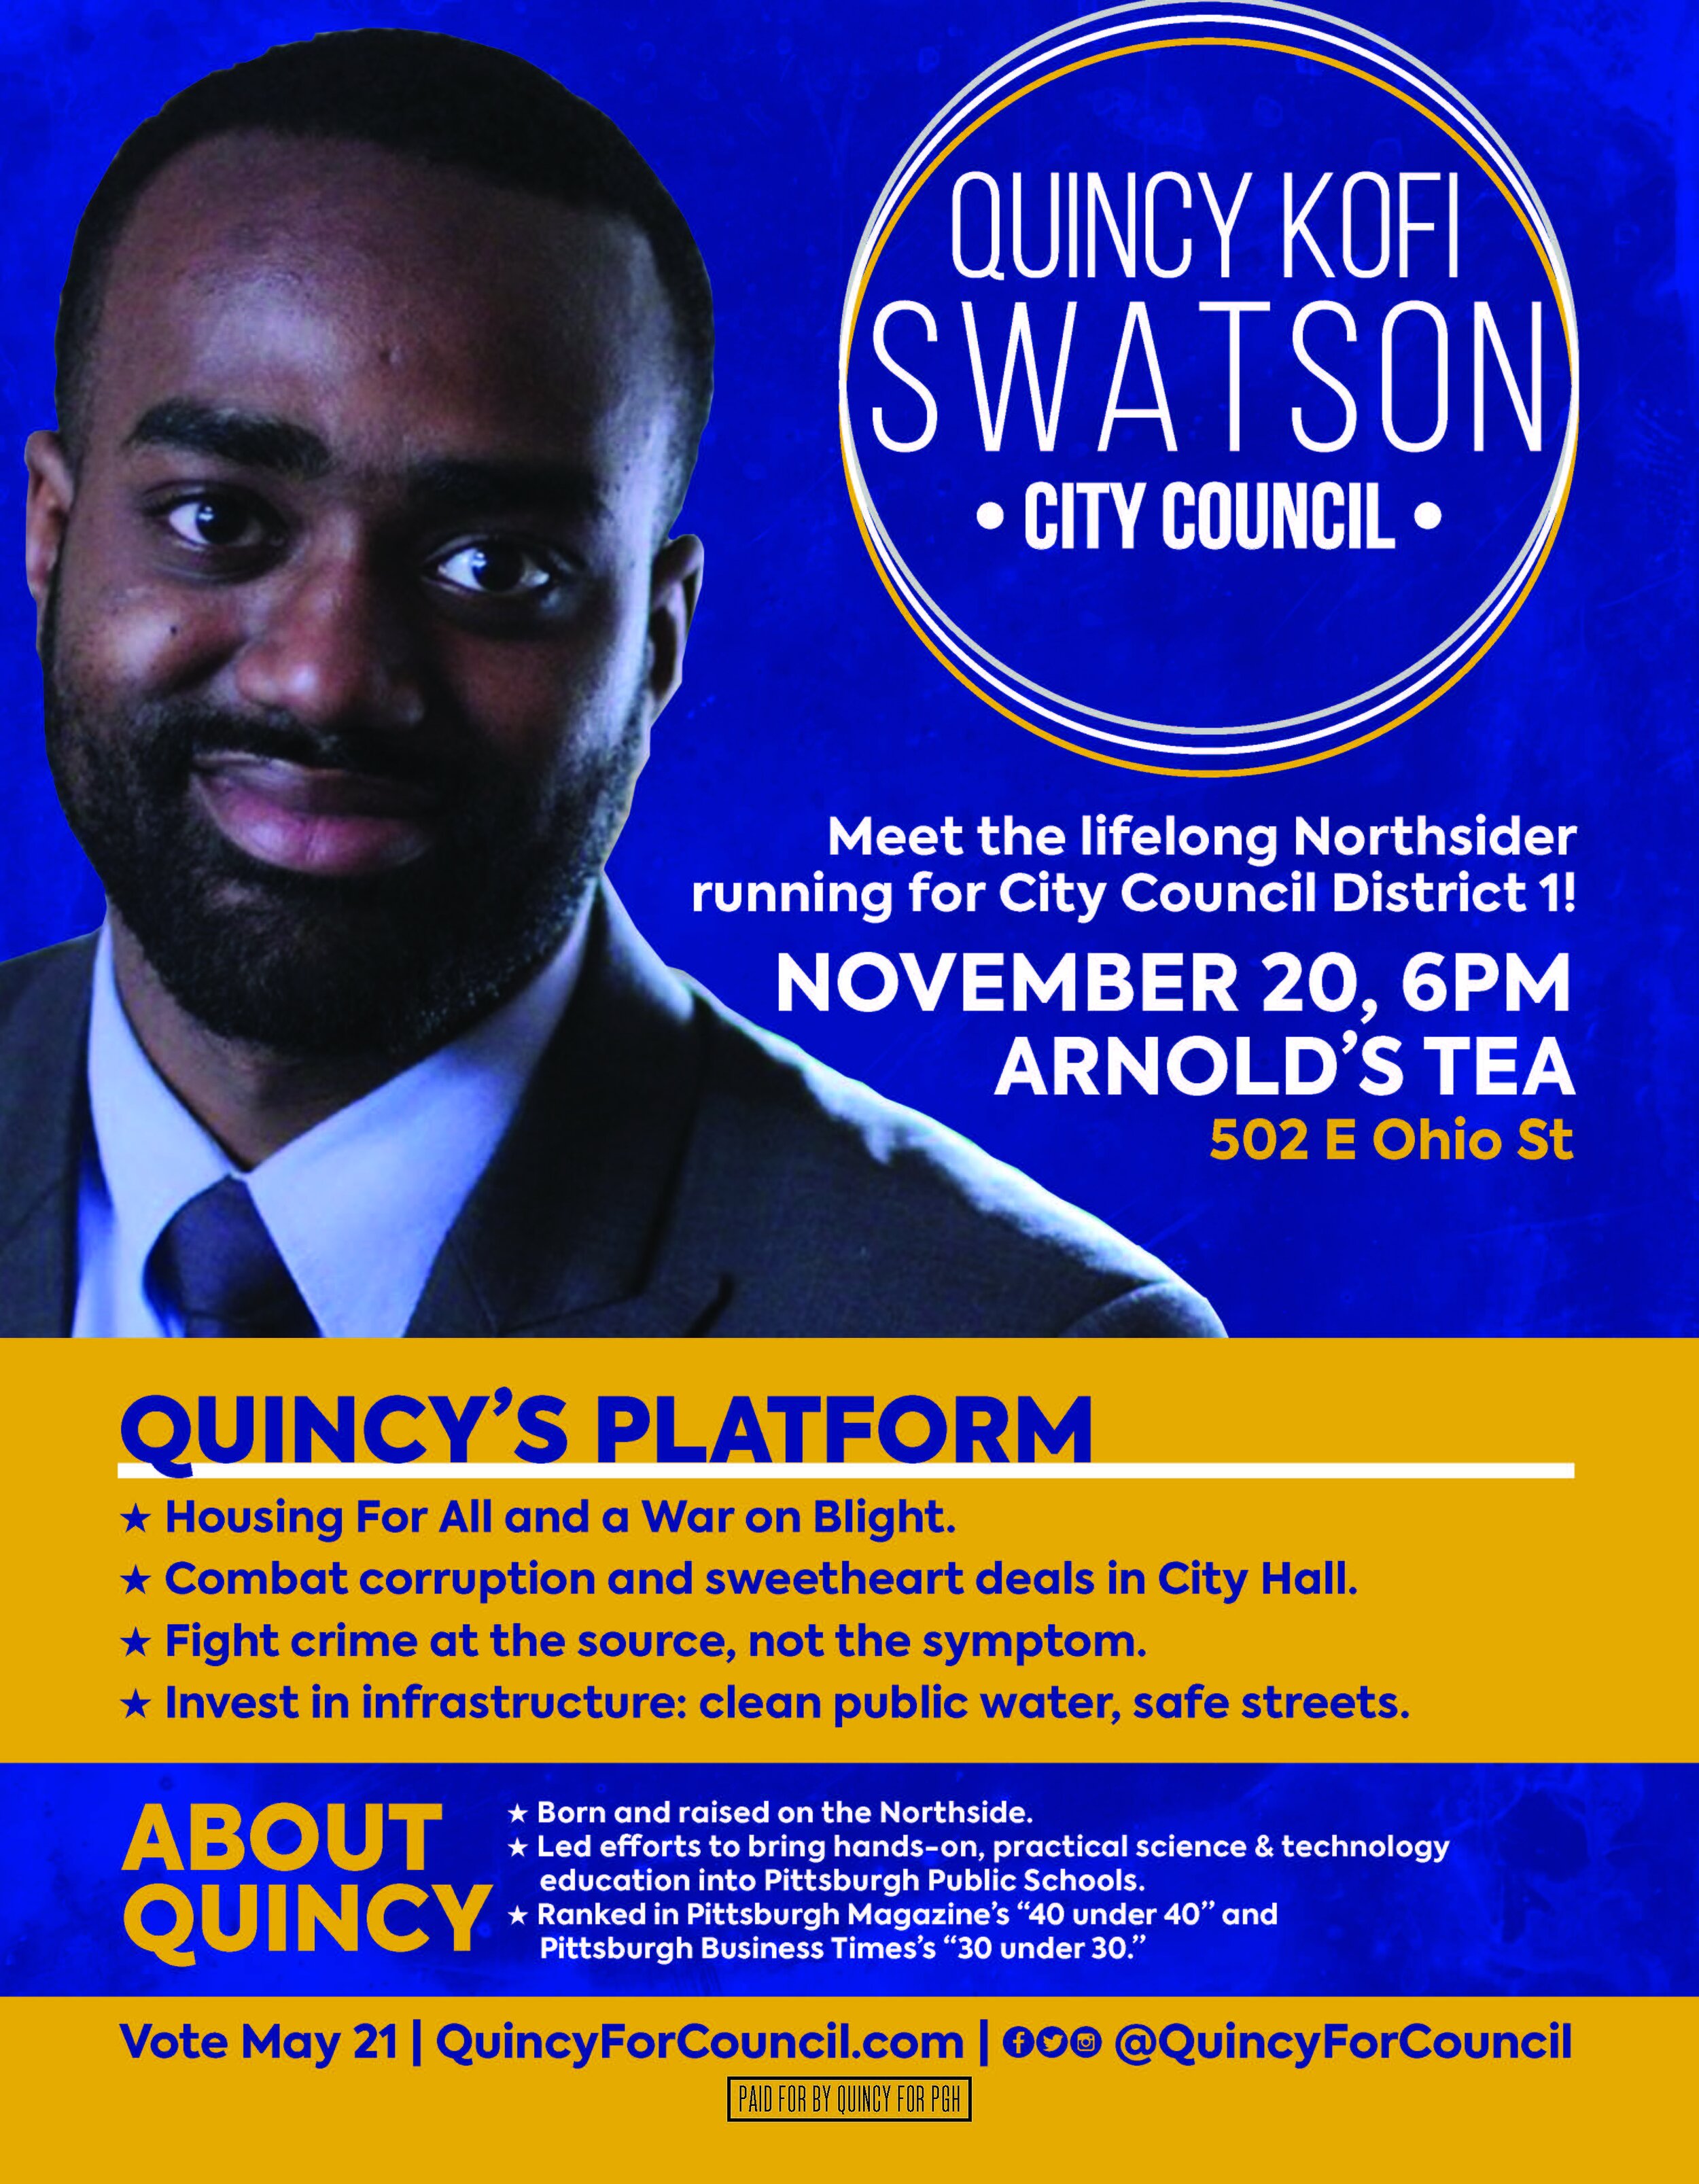 Quincy Kofi Swatson for City Council